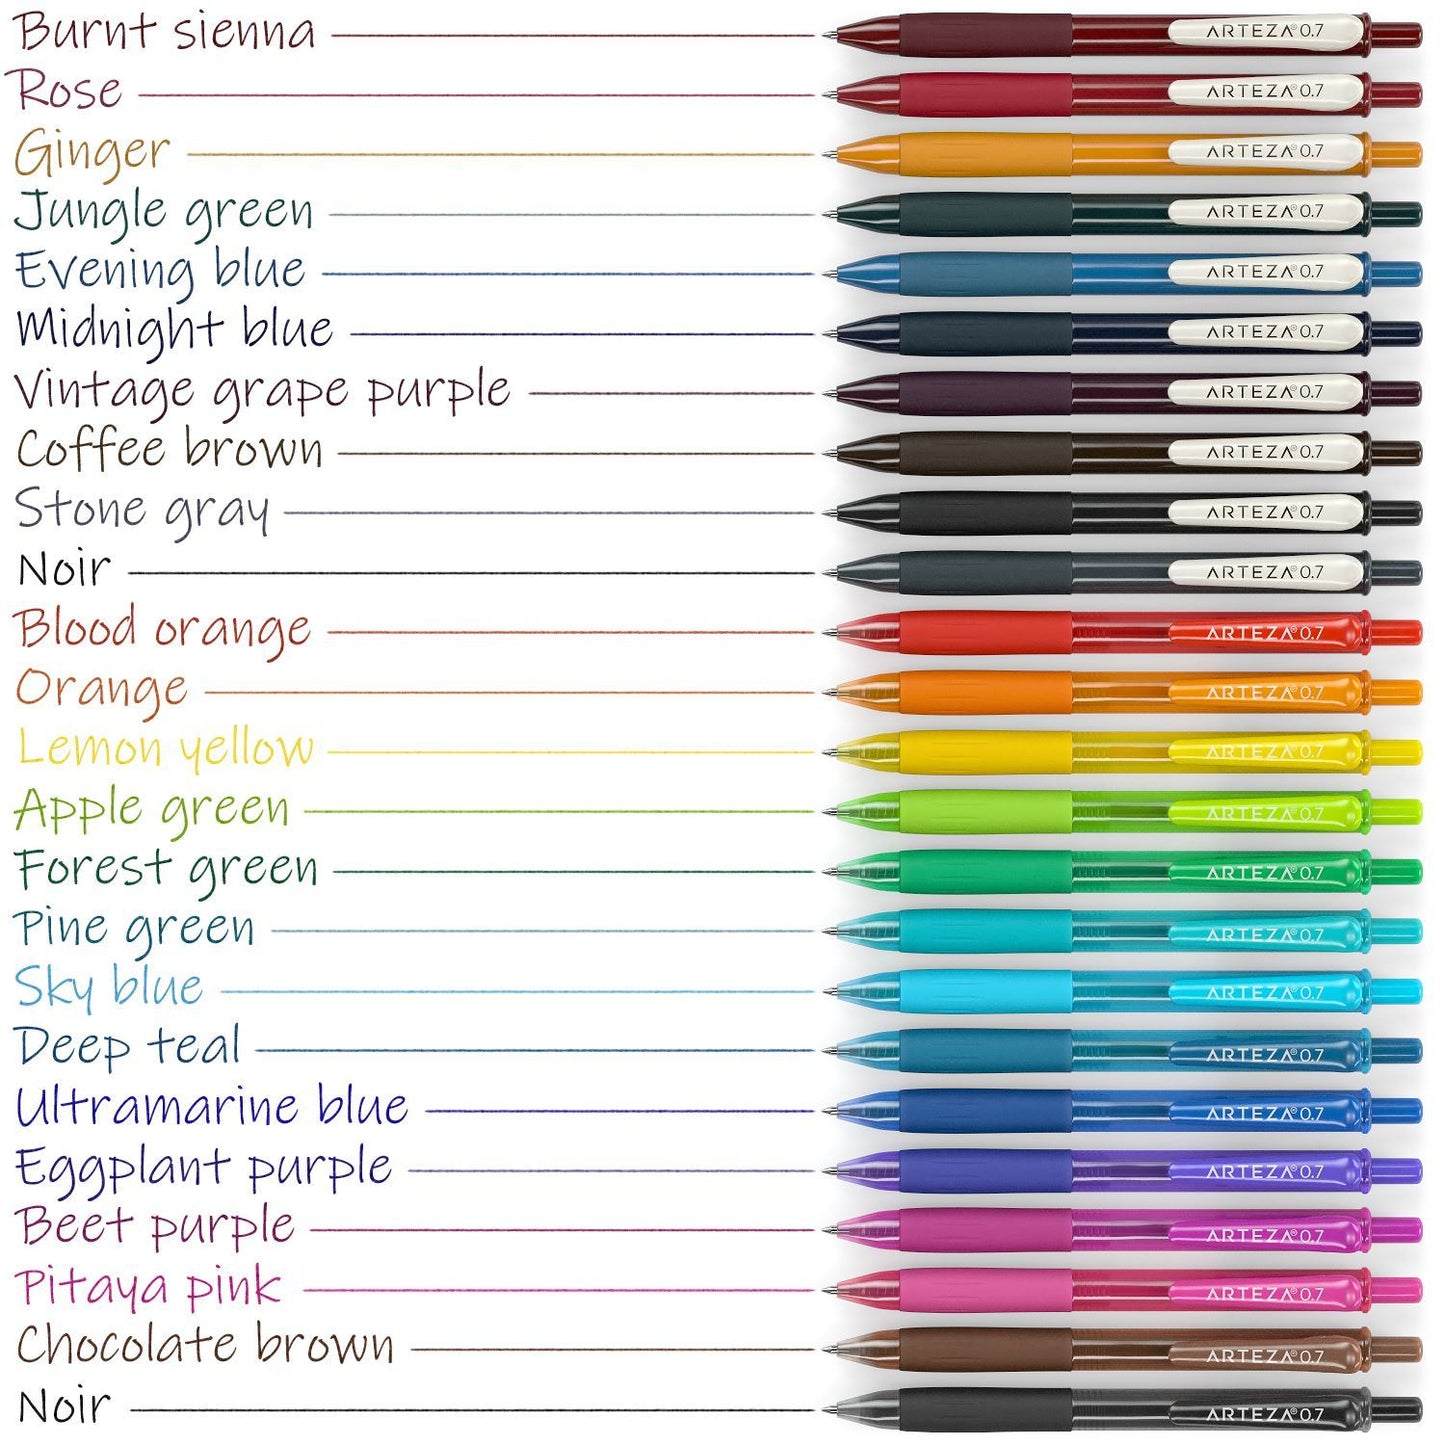 Retractable Gel Ink Pens, Vintage & Bright Colors - Set of 24